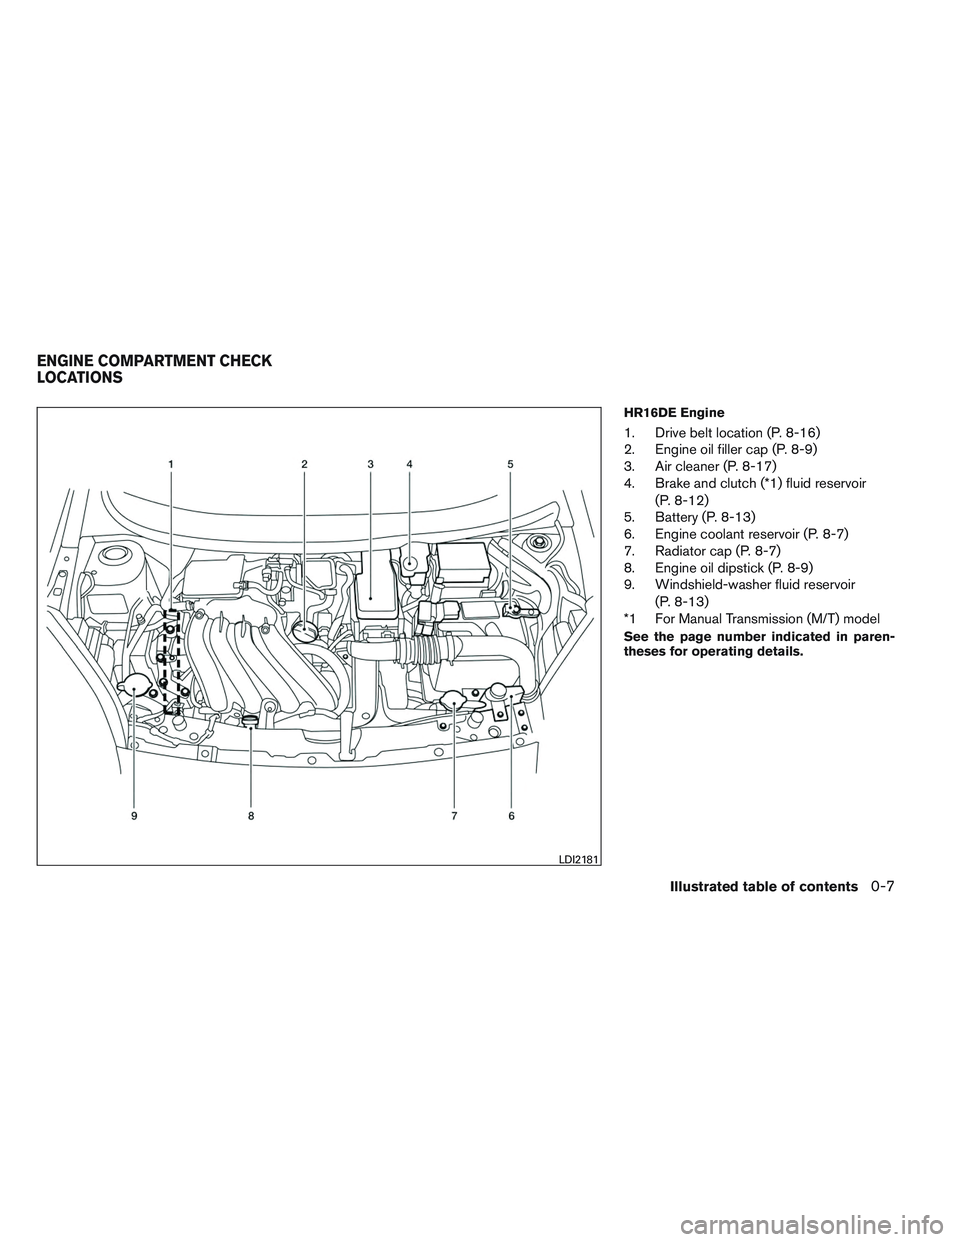 NISSAN VERSA 2013 User Guide HR16DE Engine
1. Drive belt location (P. 8-16)
2. Engine oil filler cap (P. 8-9)
3. Air cleaner (P. 8-17)
4. Brake and clutch (*1) fluid reservoir(P. 8-12)
5. Battery (P. 8-13)
6. Engine coolant reser